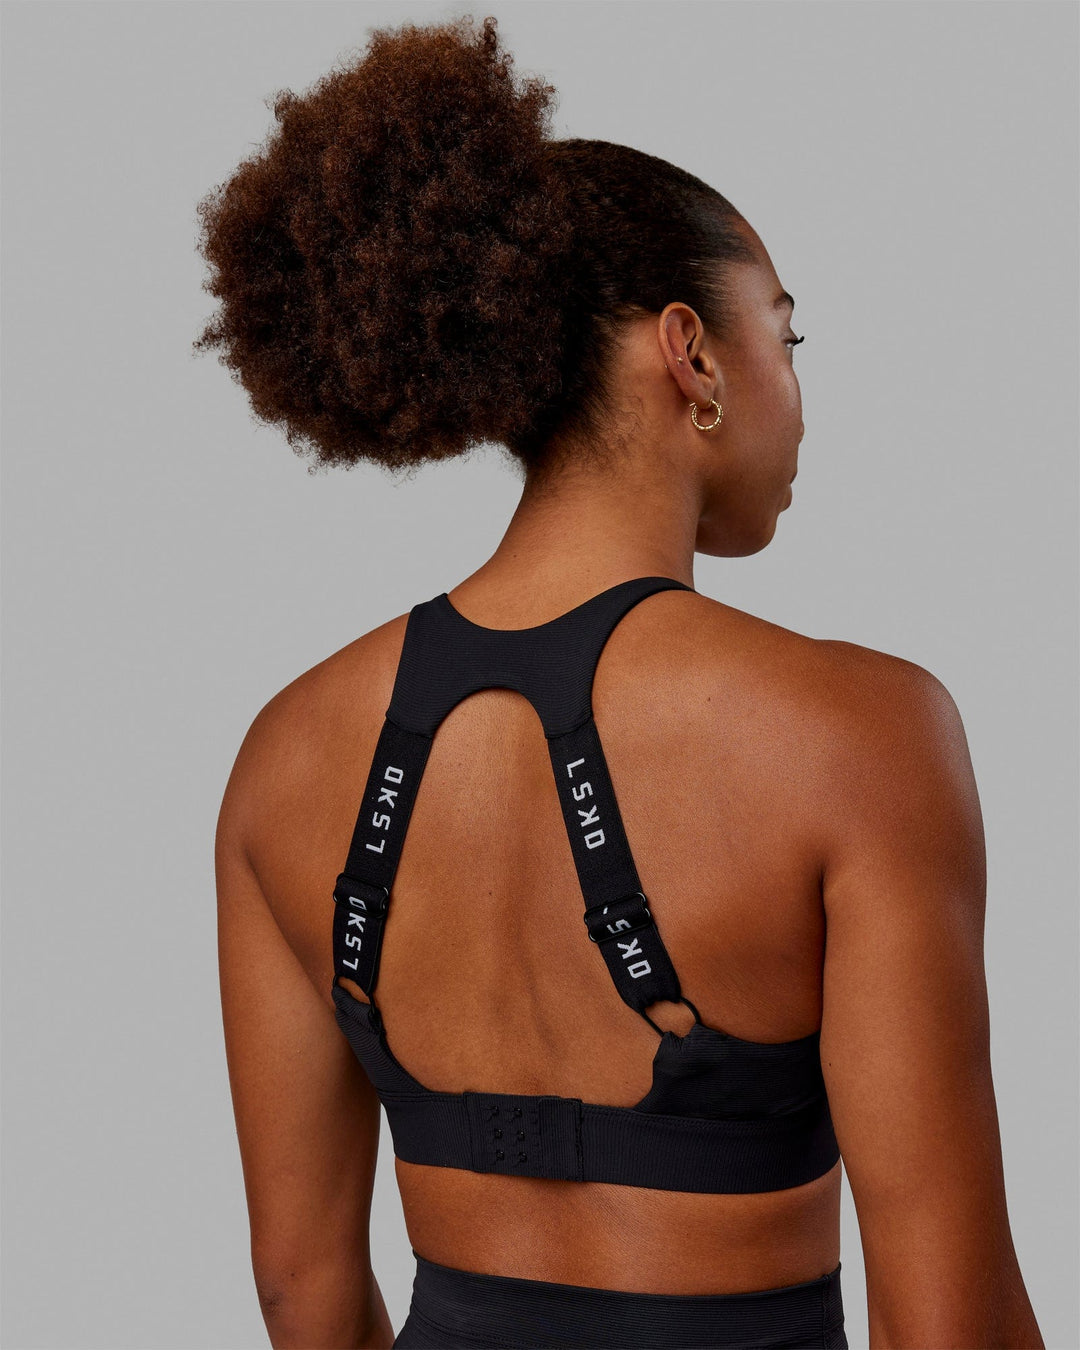 Woman wearing Resistance Ribbed Sports Bra - Black